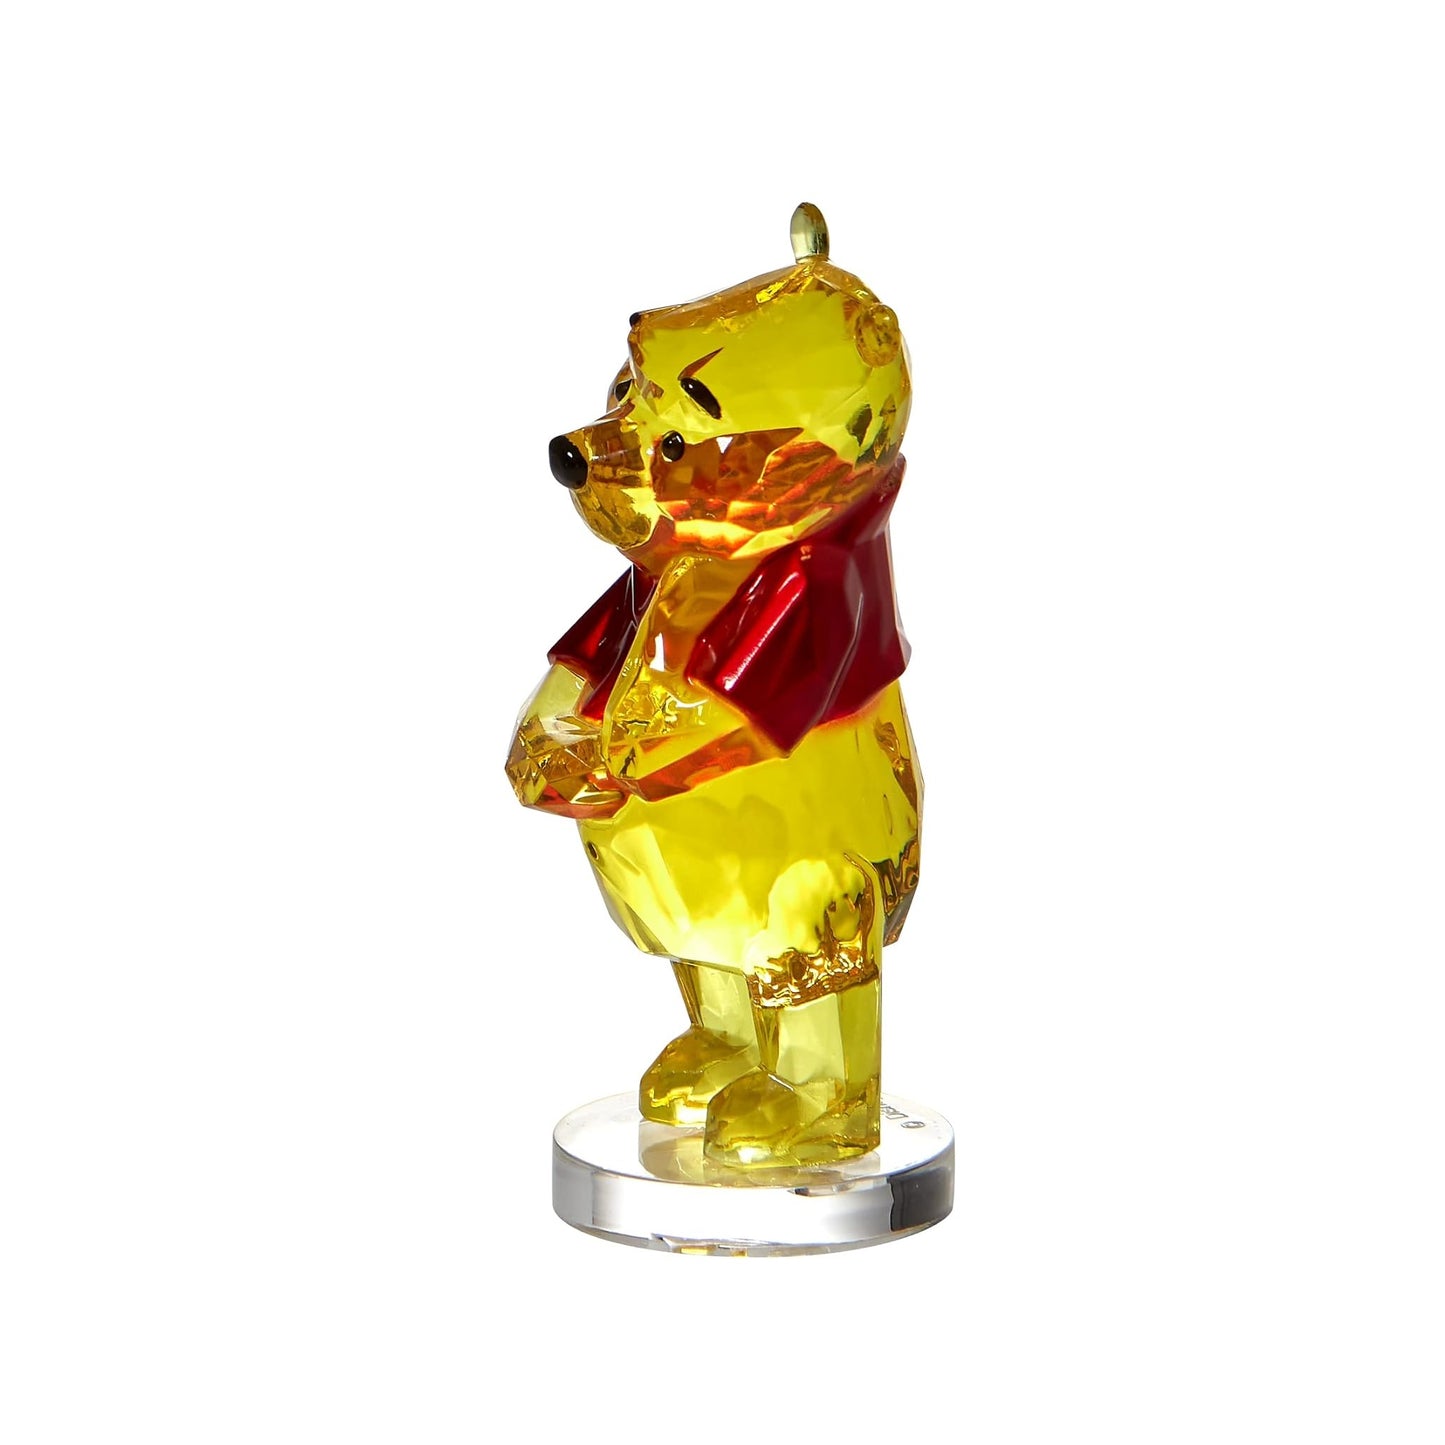 Winnie the Pooh Facets Acrylic Disney Figure